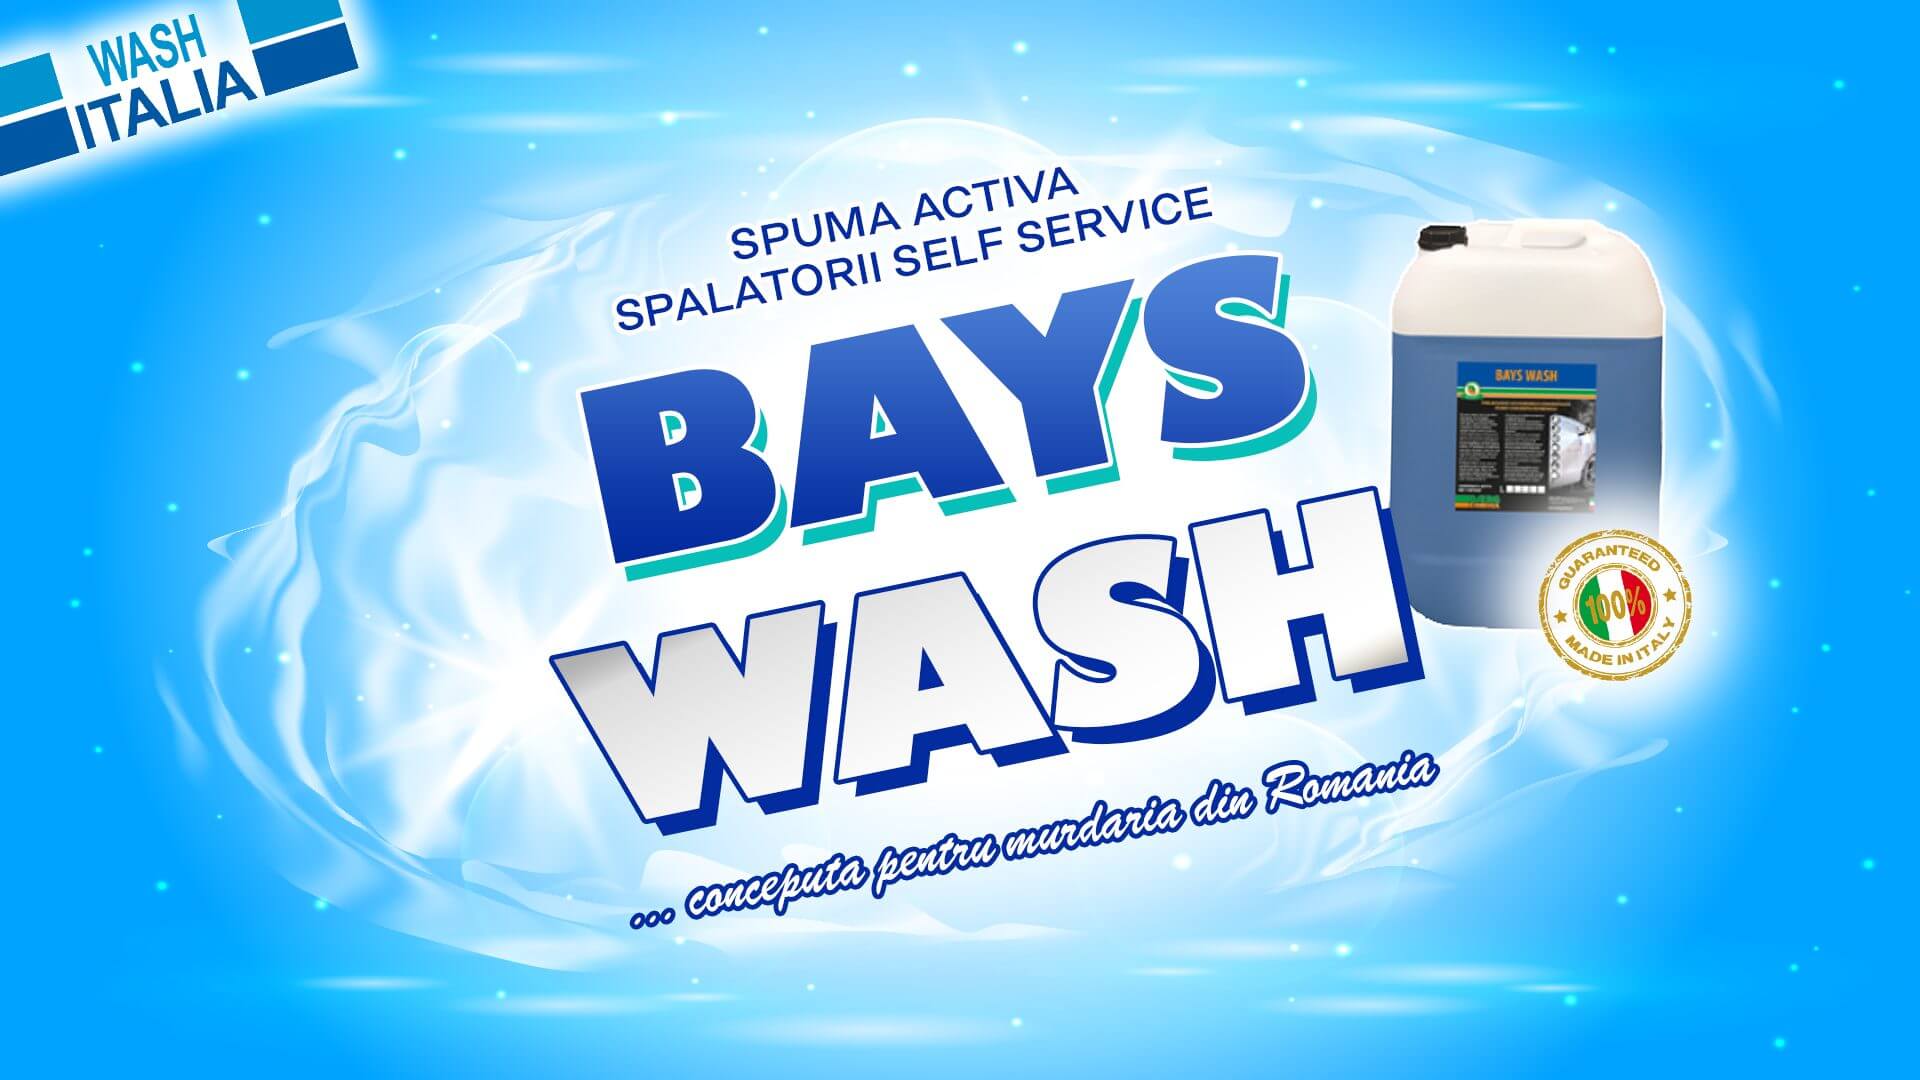 Spuma Activa Bays Wash